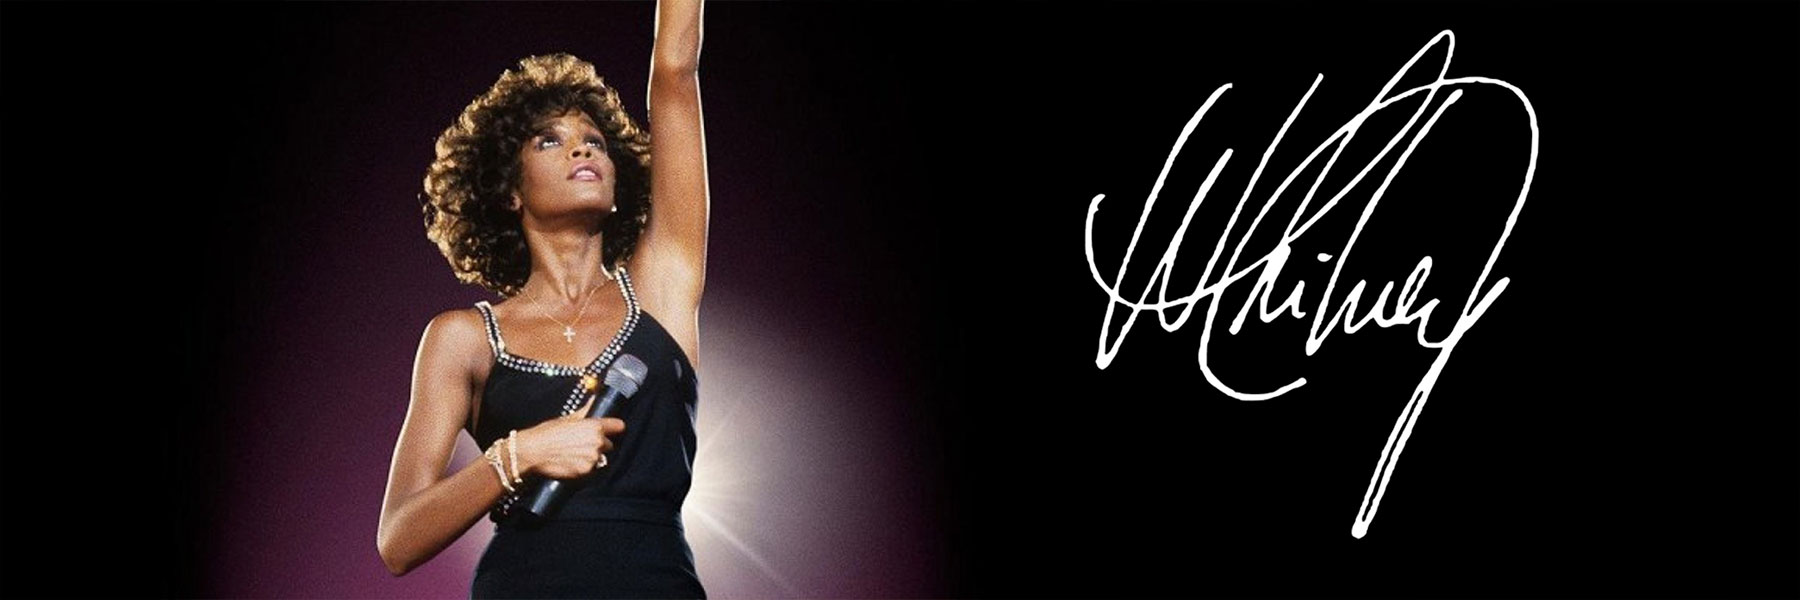 Whitney Houston | HYPER iCONiC.